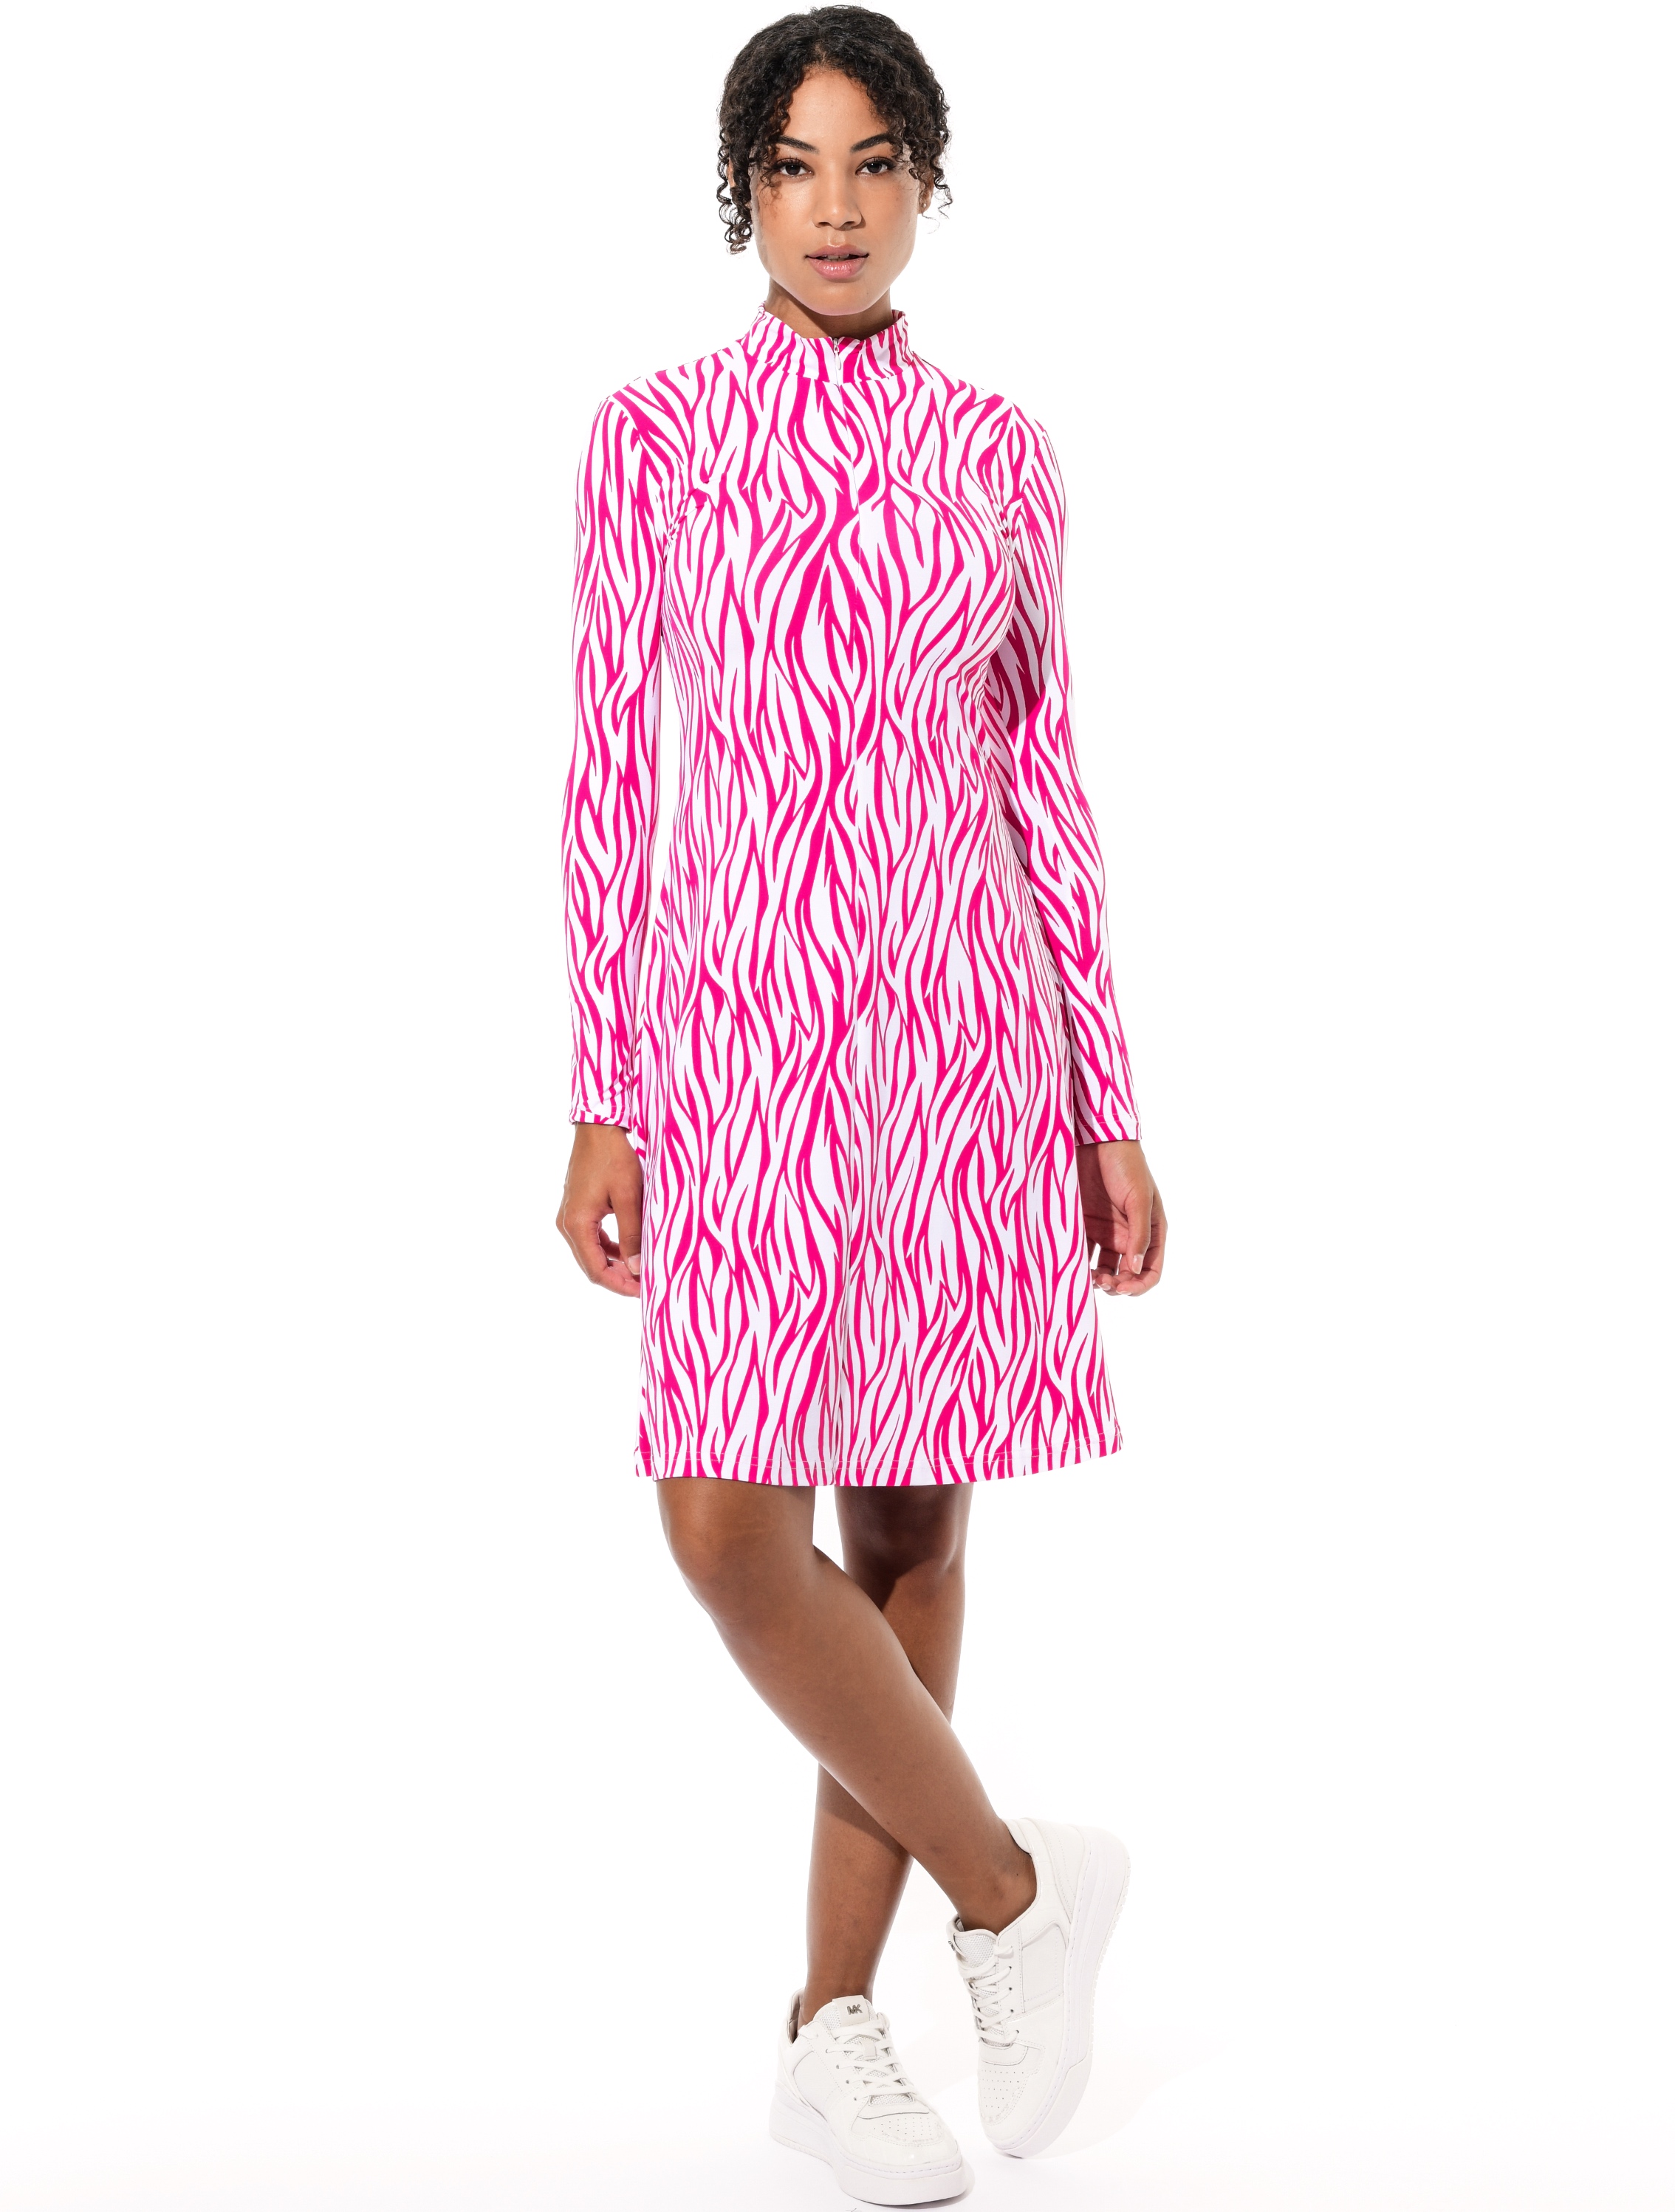 Zebra Skin print dress flamingo 